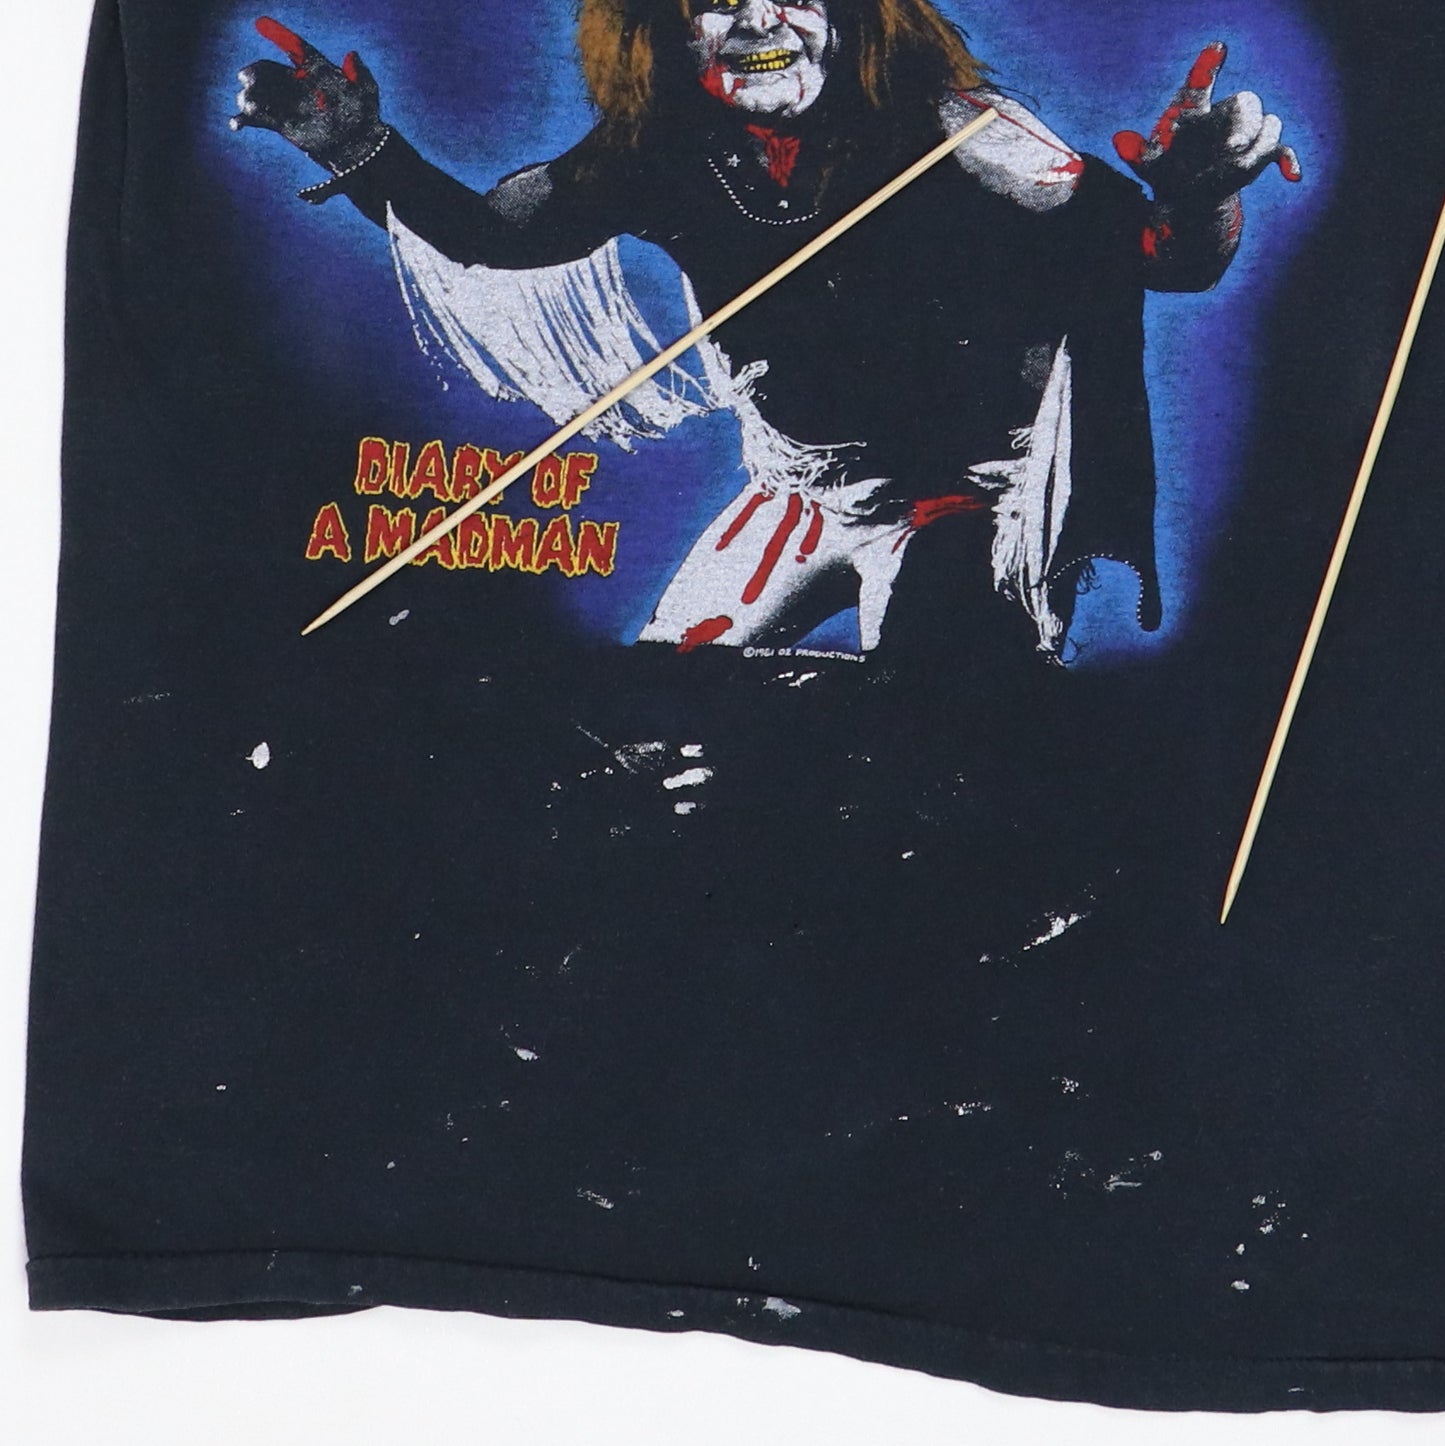 1981 Ozzy Osbourne Diary Of A Madman Shirt